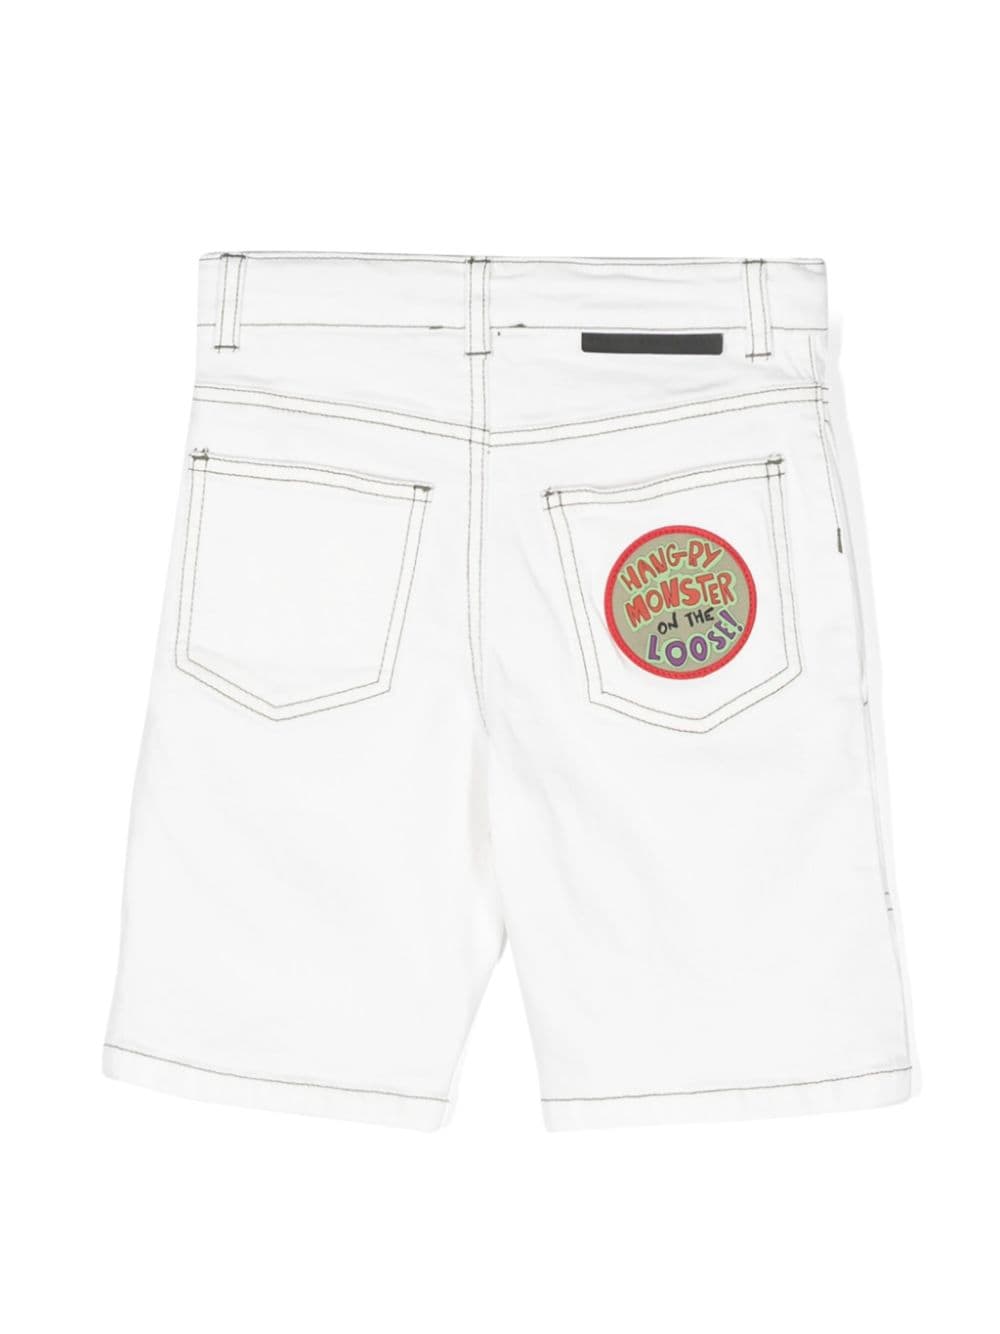 White denim Bermuda shorts for boys